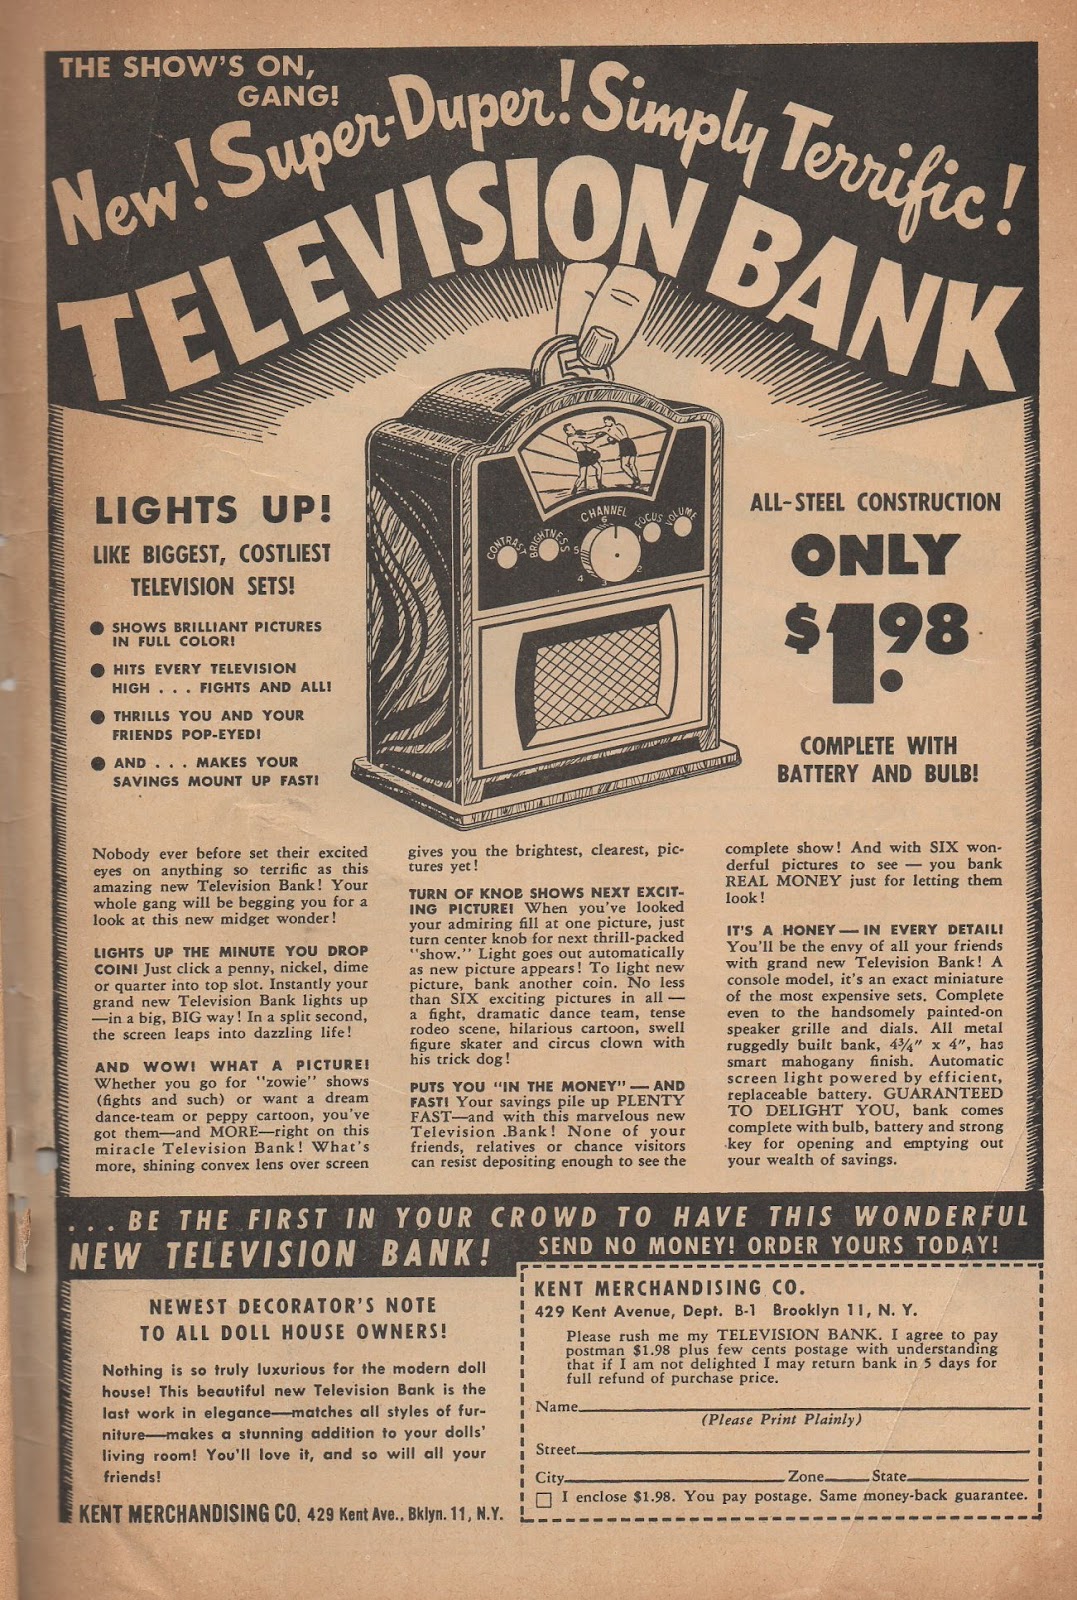 Tvs bank. Old advertisement.